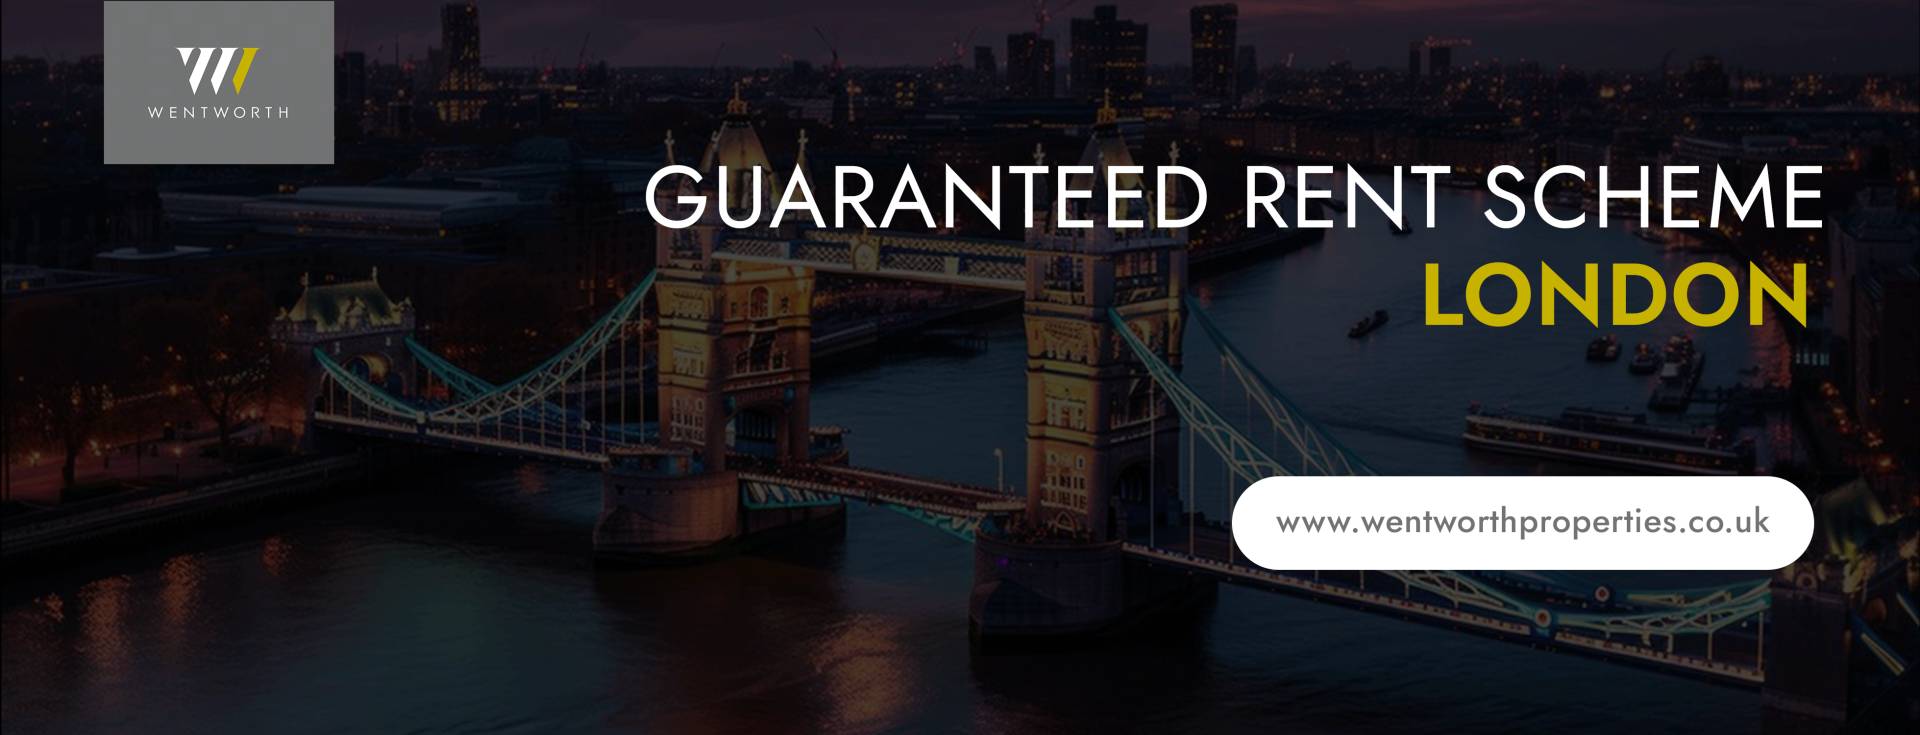 guaranteed rent scheme london